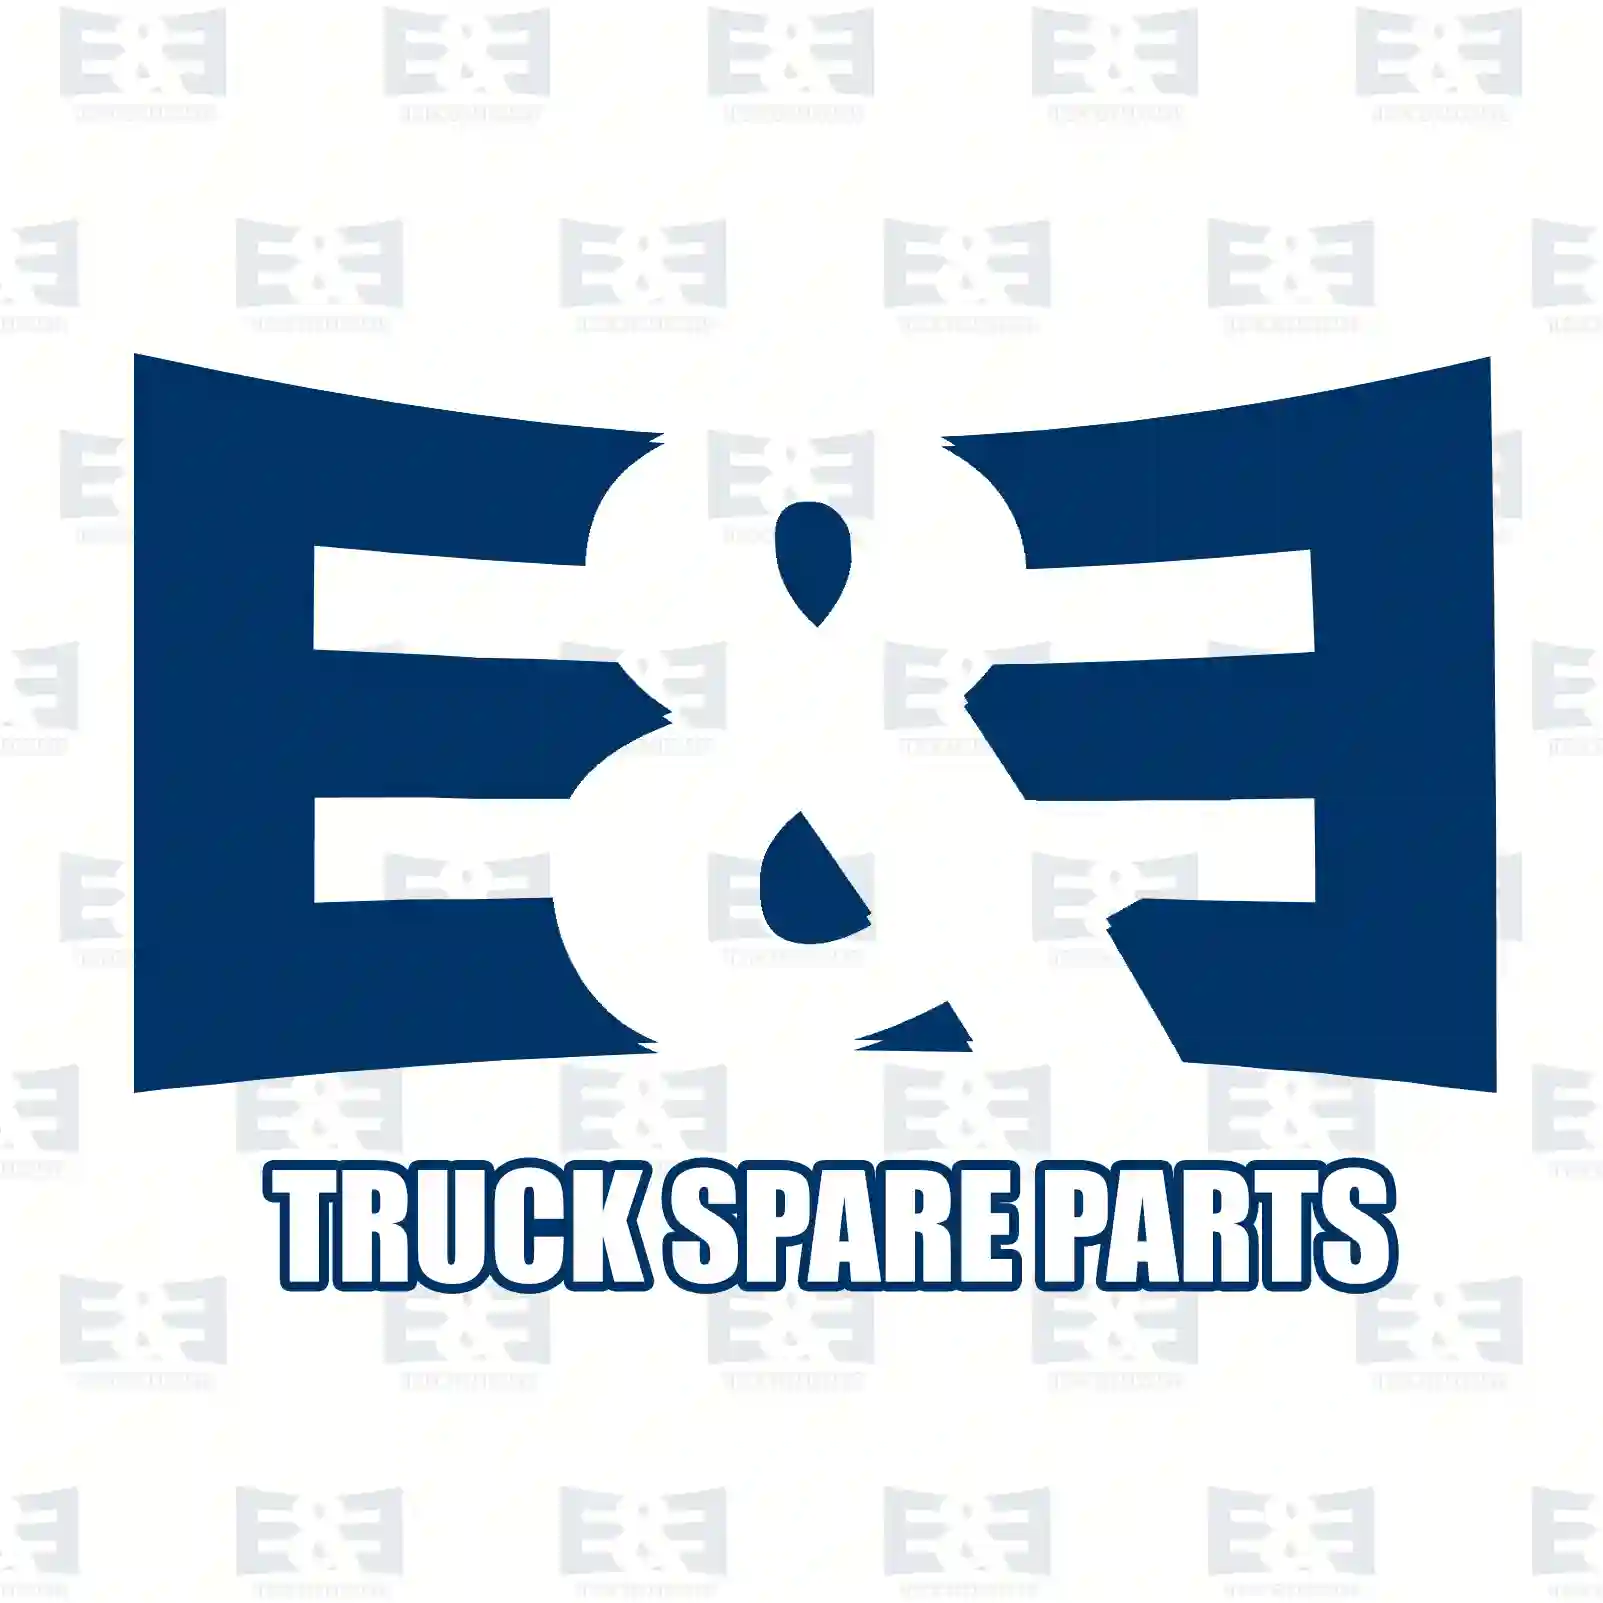 Air dryer cartridge, 2E2296946, 0699387, 1506635, 1527757, 1782420, 1872122, 699387, 699387G, 5801382289, 81521550041, 81521550043, 20557234, 20972915, 21508133, 21620181, ZG50059-0008 ||  2E2296946 E&E Truck Spare Parts | Truck Spare Parts, Auotomotive Spare Parts Air dryer cartridge, 2E2296946, 0699387, 1506635, 1527757, 1782420, 1872122, 699387, 699387G, 5801382289, 81521550041, 81521550043, 20557234, 20972915, 21508133, 21620181, ZG50059-0008 ||  2E2296946 E&E Truck Spare Parts | Truck Spare Parts, Auotomotive Spare Parts